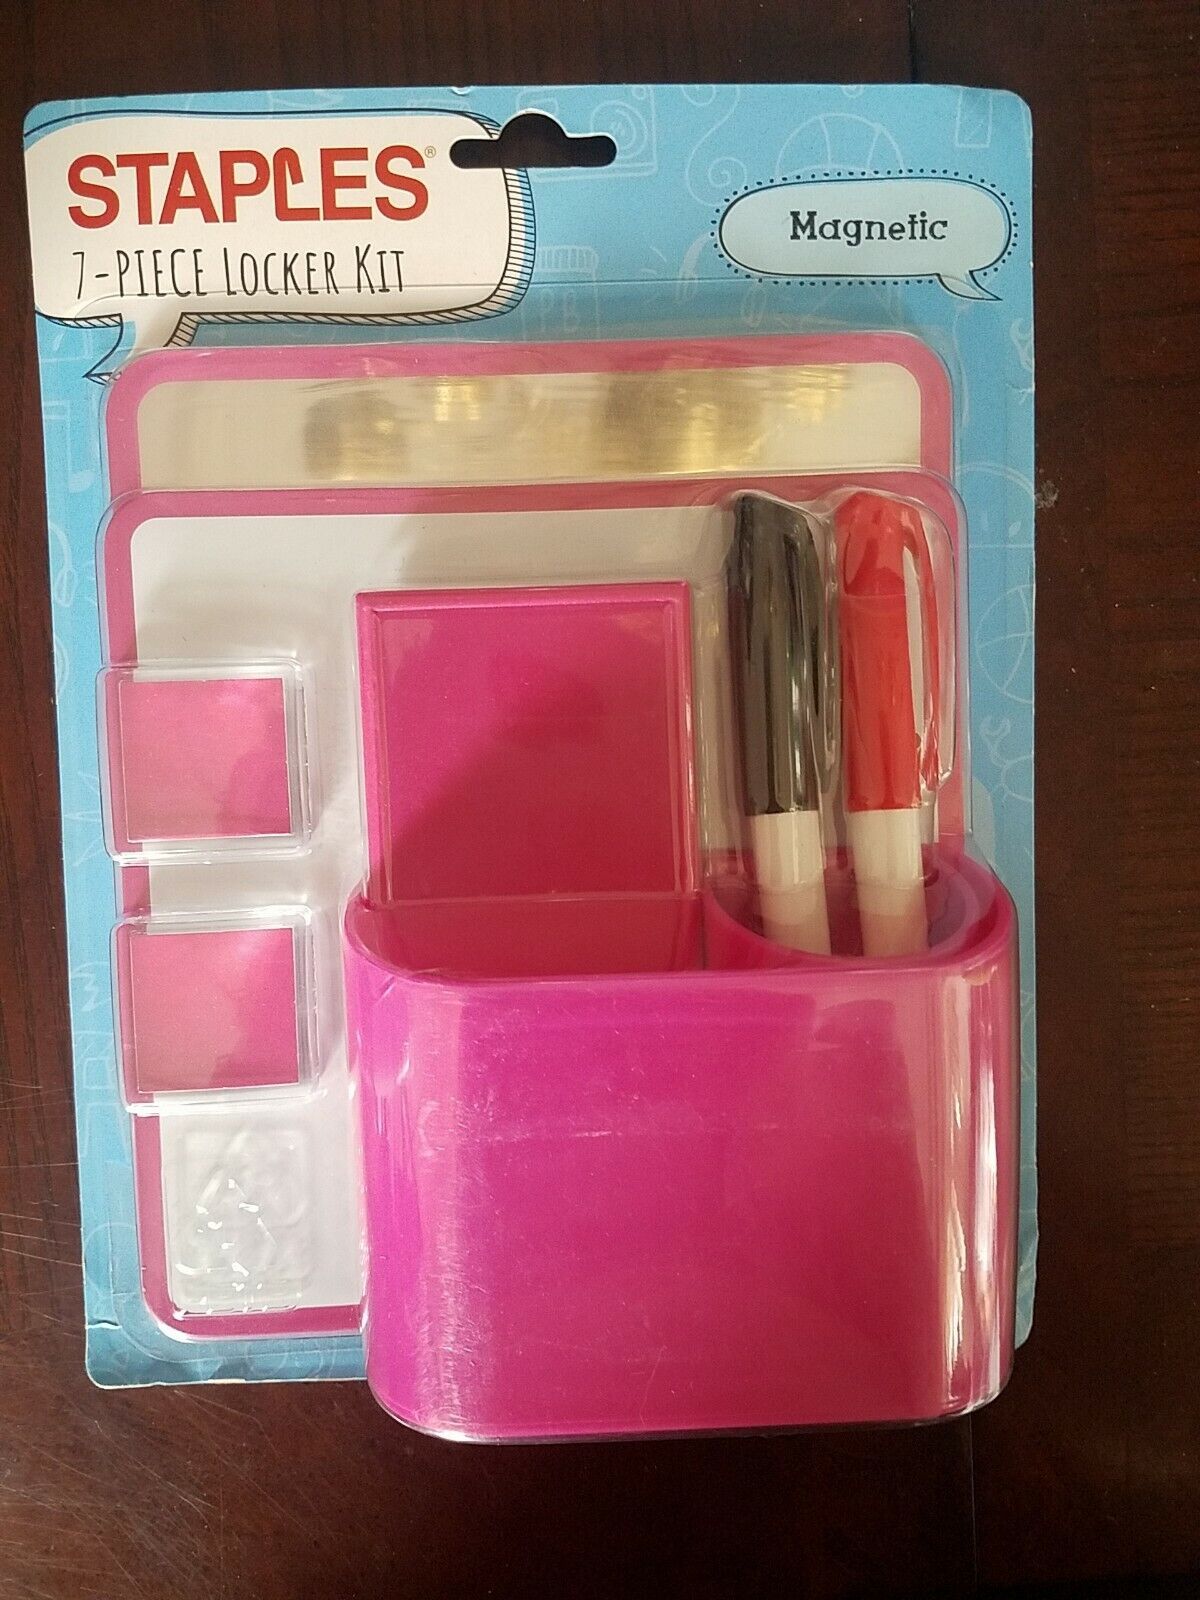 Primary image for Staples 7-Piece Locker Kit